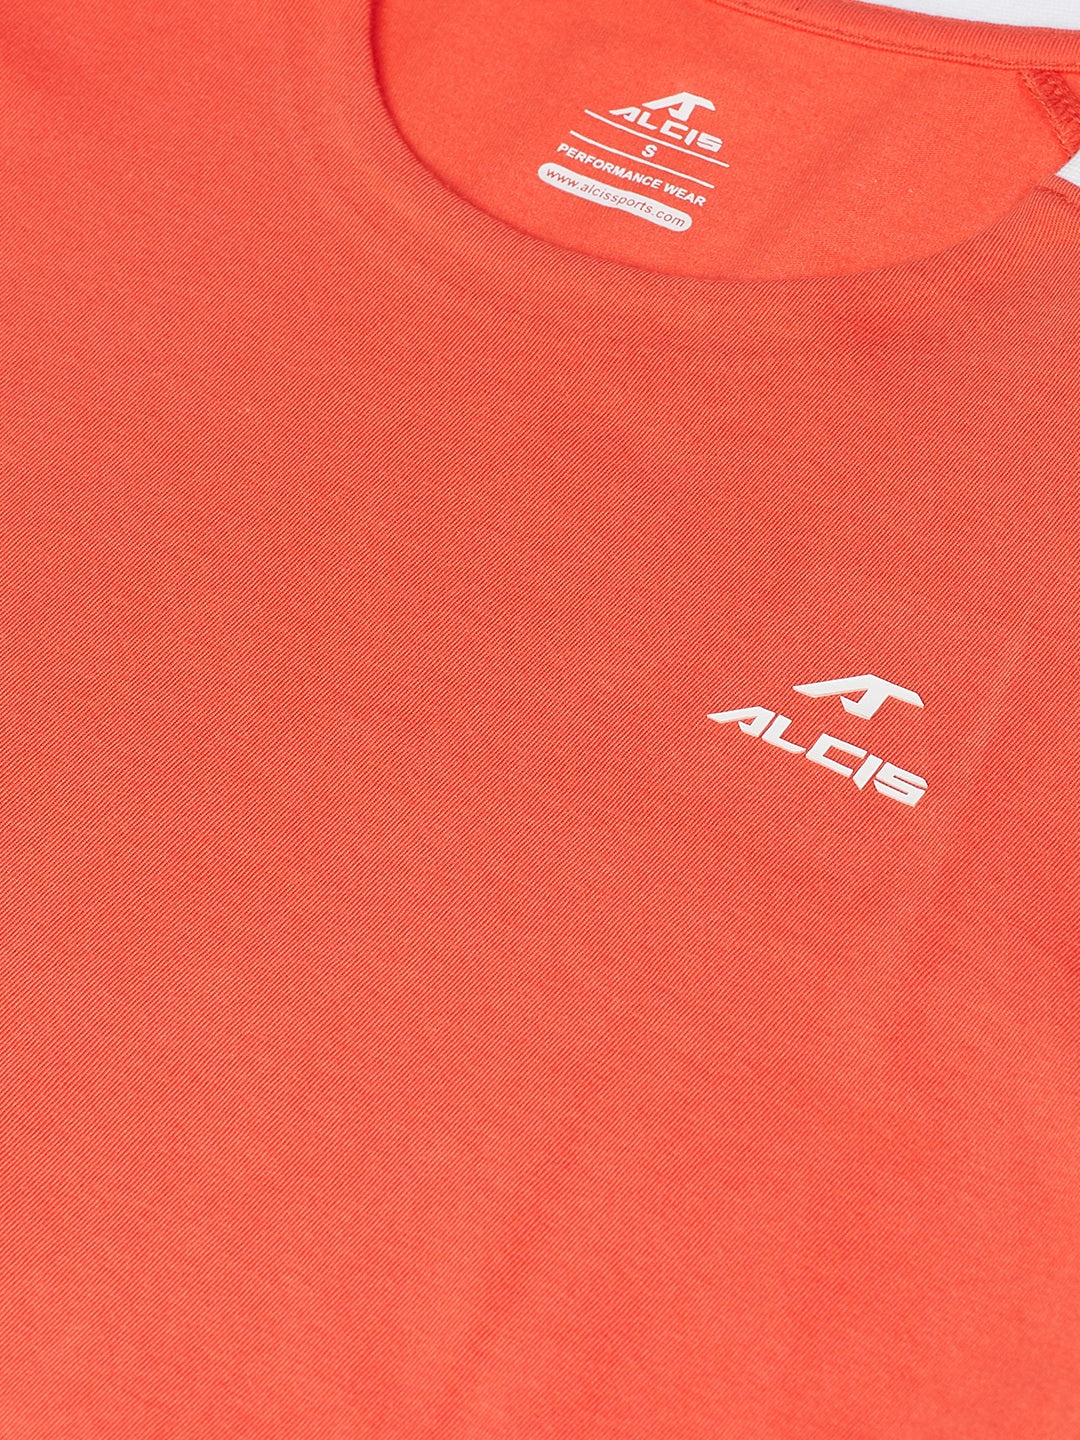 Alcis Women Coral Orange Solid Slim Fit Round Neck Sports T-shirt